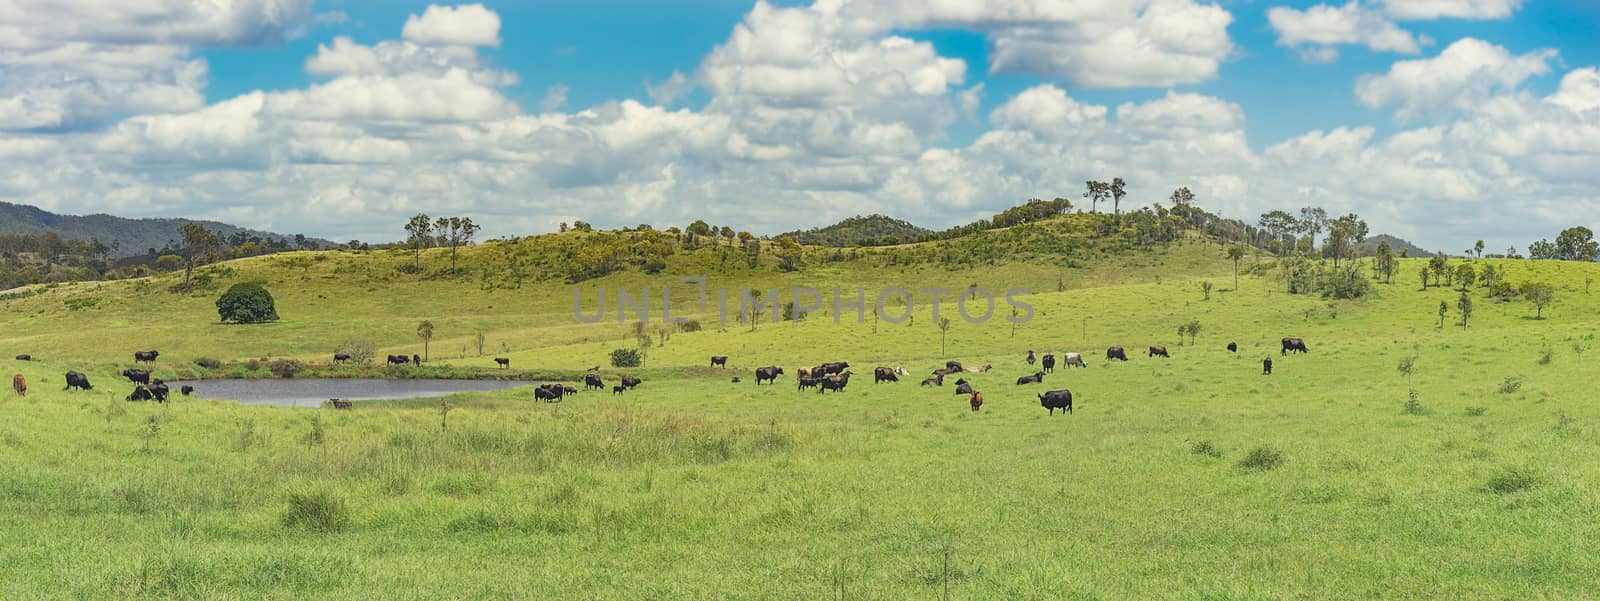 Panoramic Australian Rural Landscape by sherj